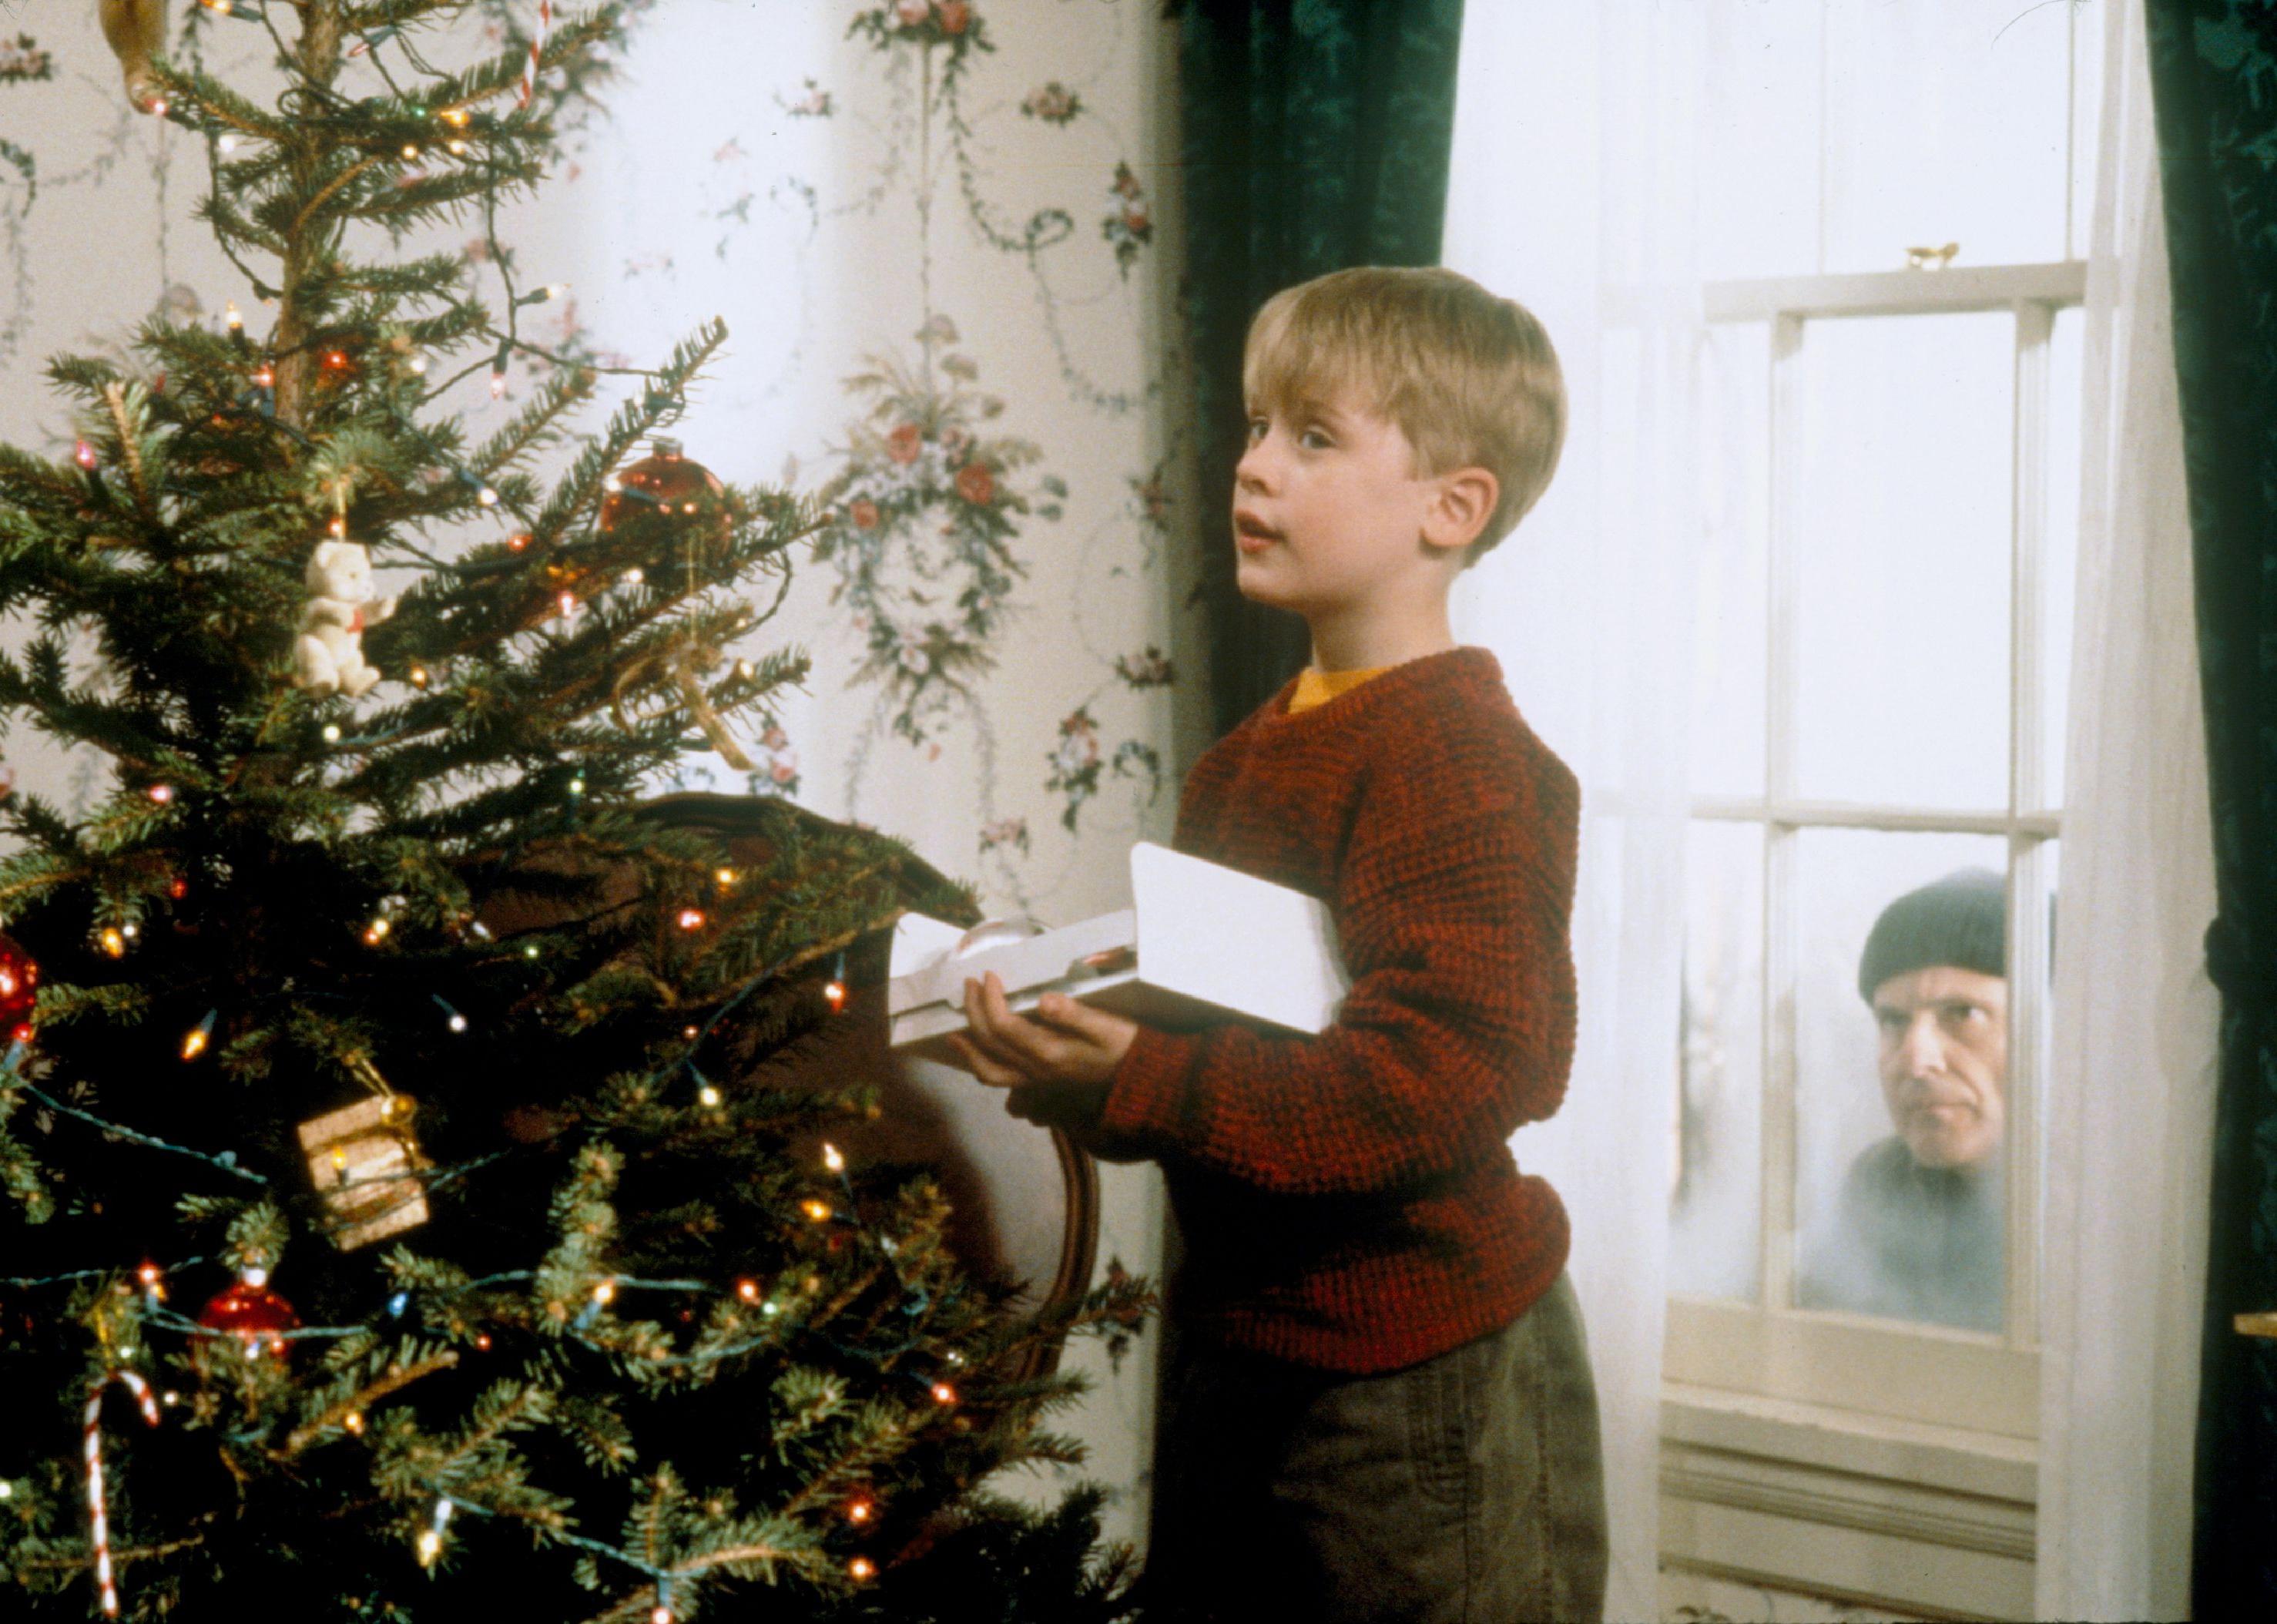 Macaulay Culkin decorating a Christmas tree while Joe Pesci peers into the window from outside. 